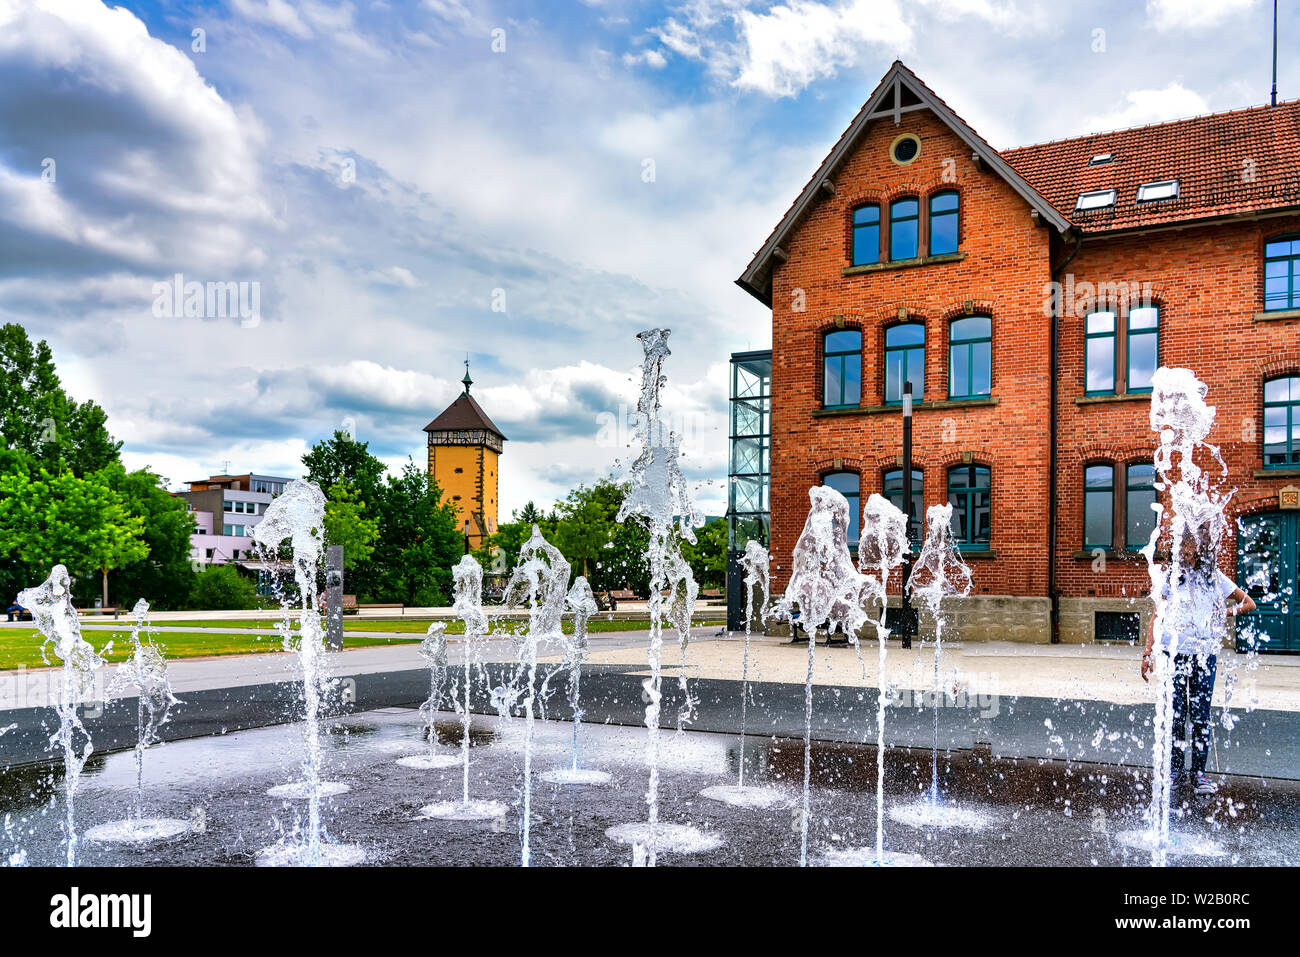 Water fountains in the Bürgerpark ( public park) of Reutlingen, Germany Stock Photo